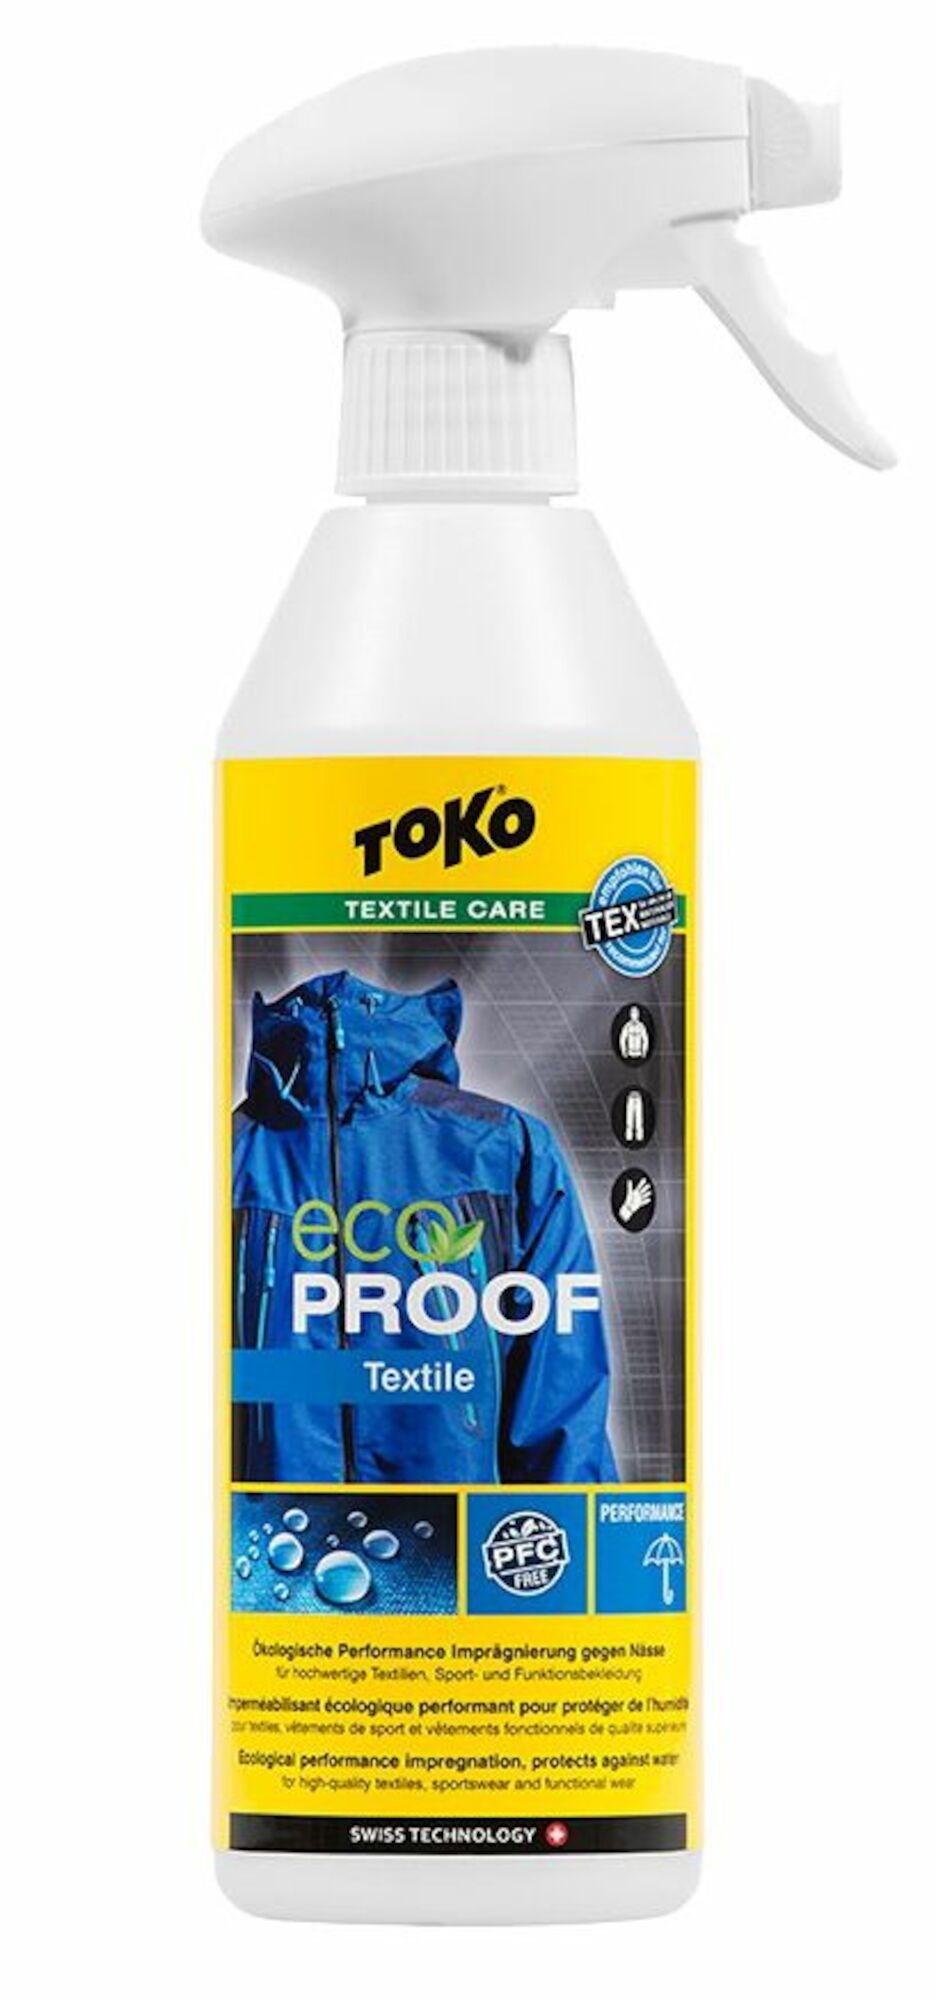 TOKO Eco Textile Proof